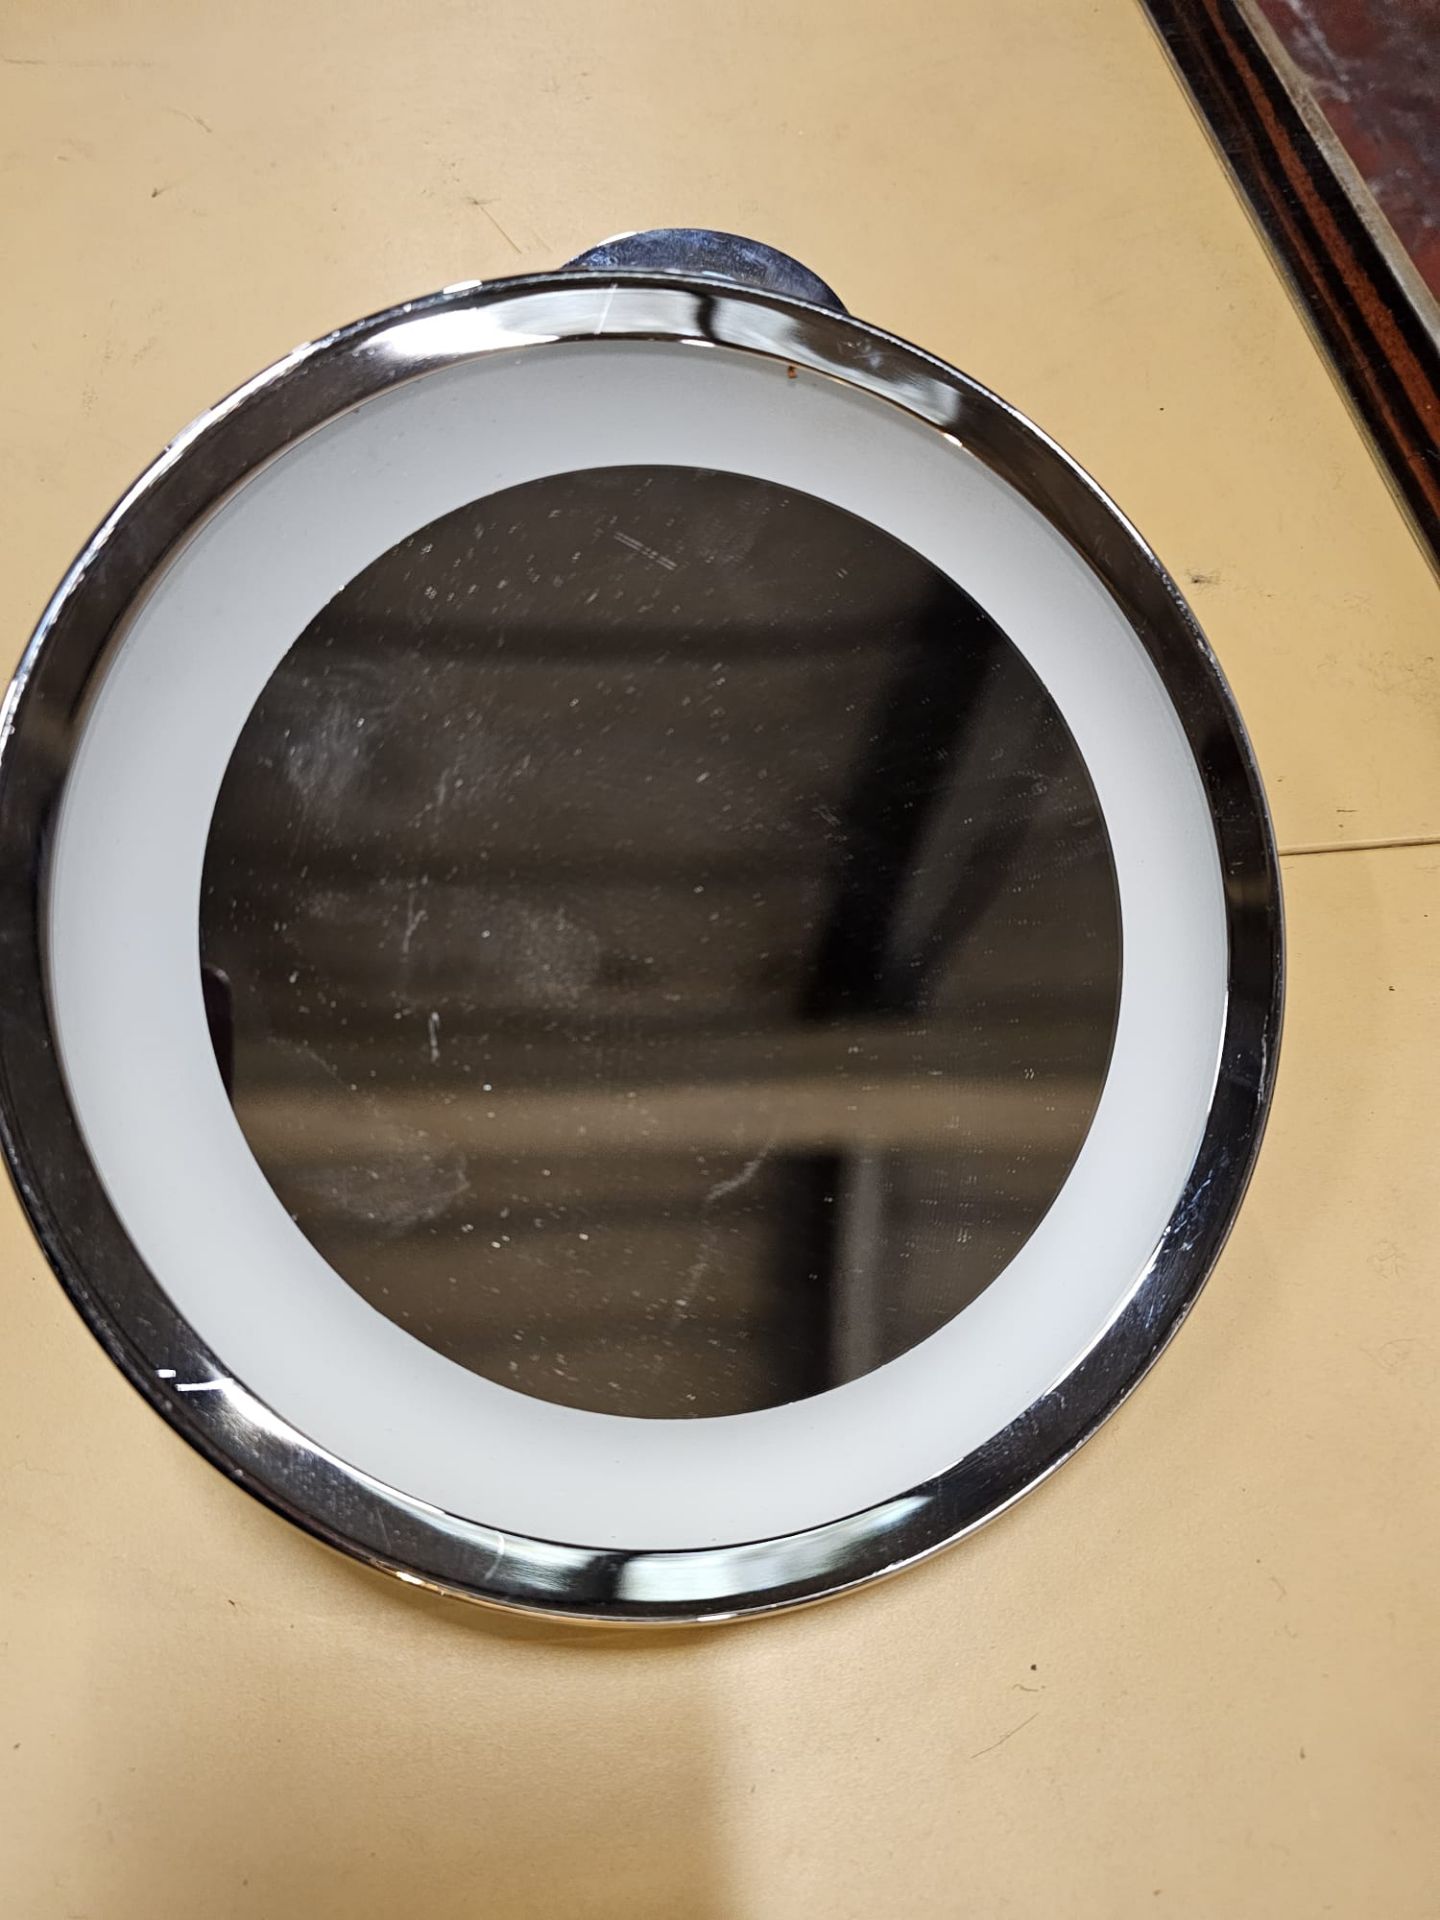 LED Illuminated Magnifying Vanity Mirror For Bathroom Round Ingress Protection Rating IP44 - Image 2 of 3